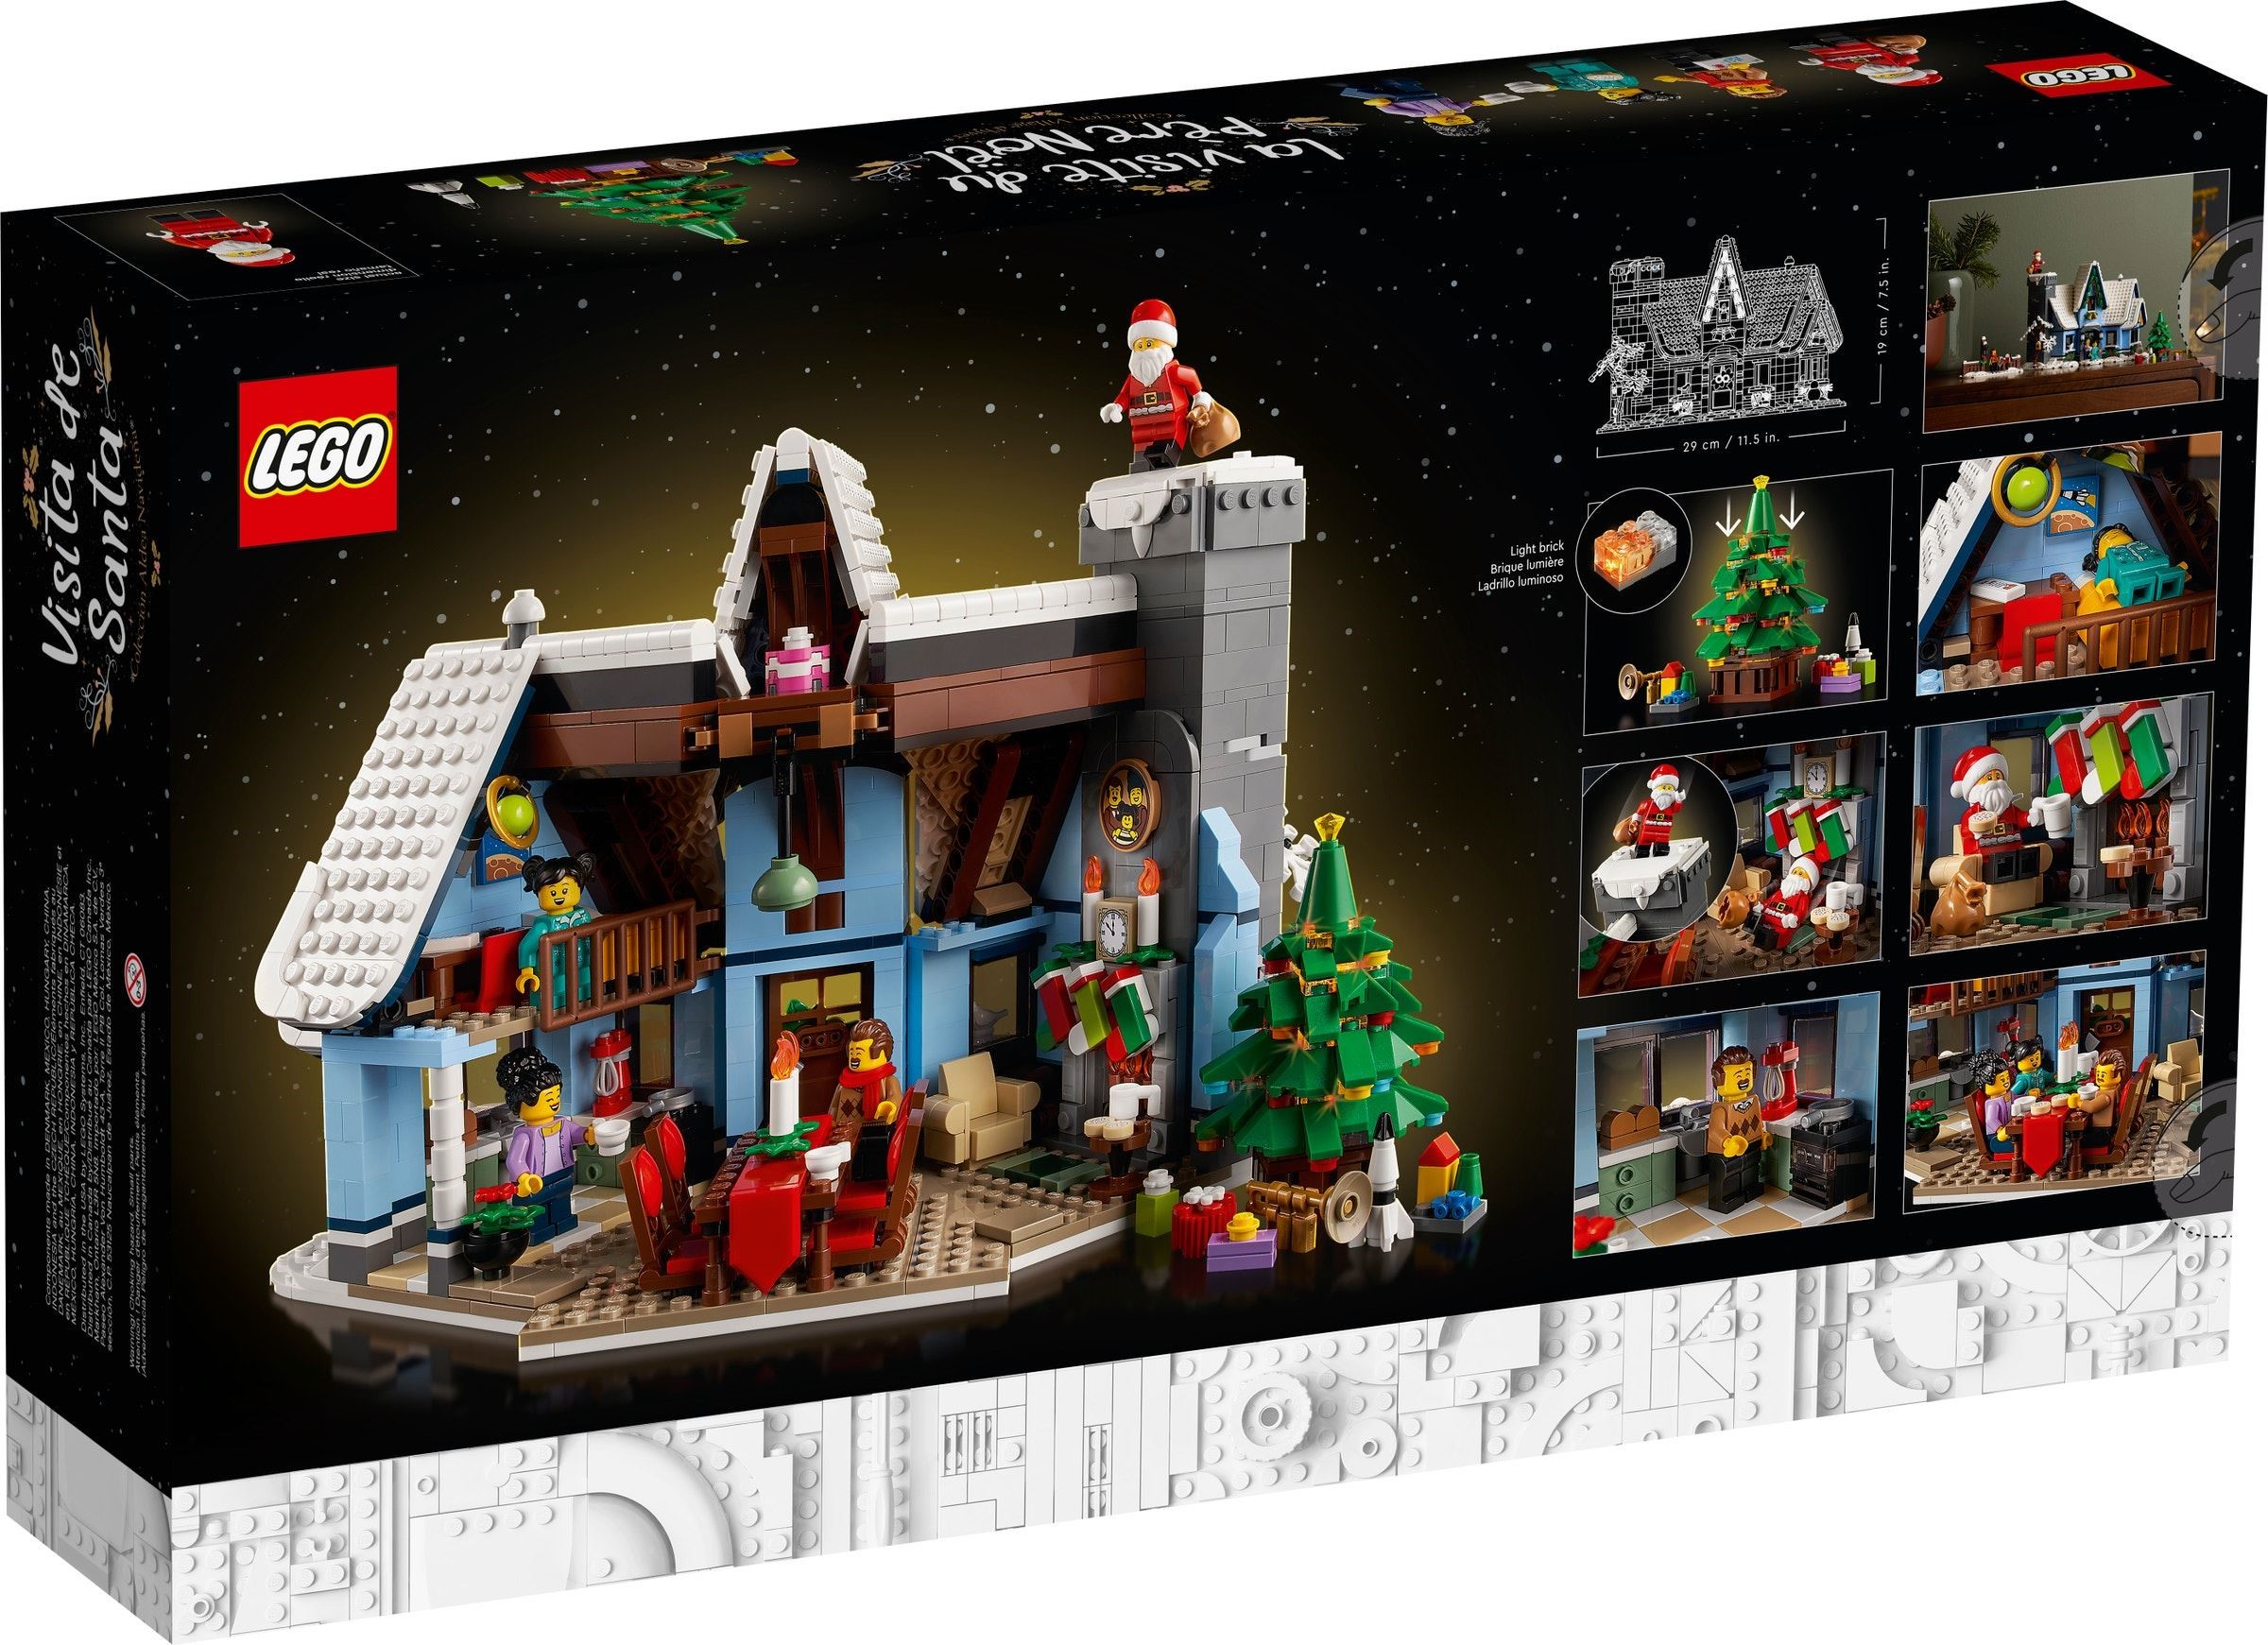 LEGO Winter Village Santa's Visit (10293) Revealed The Brick Fan